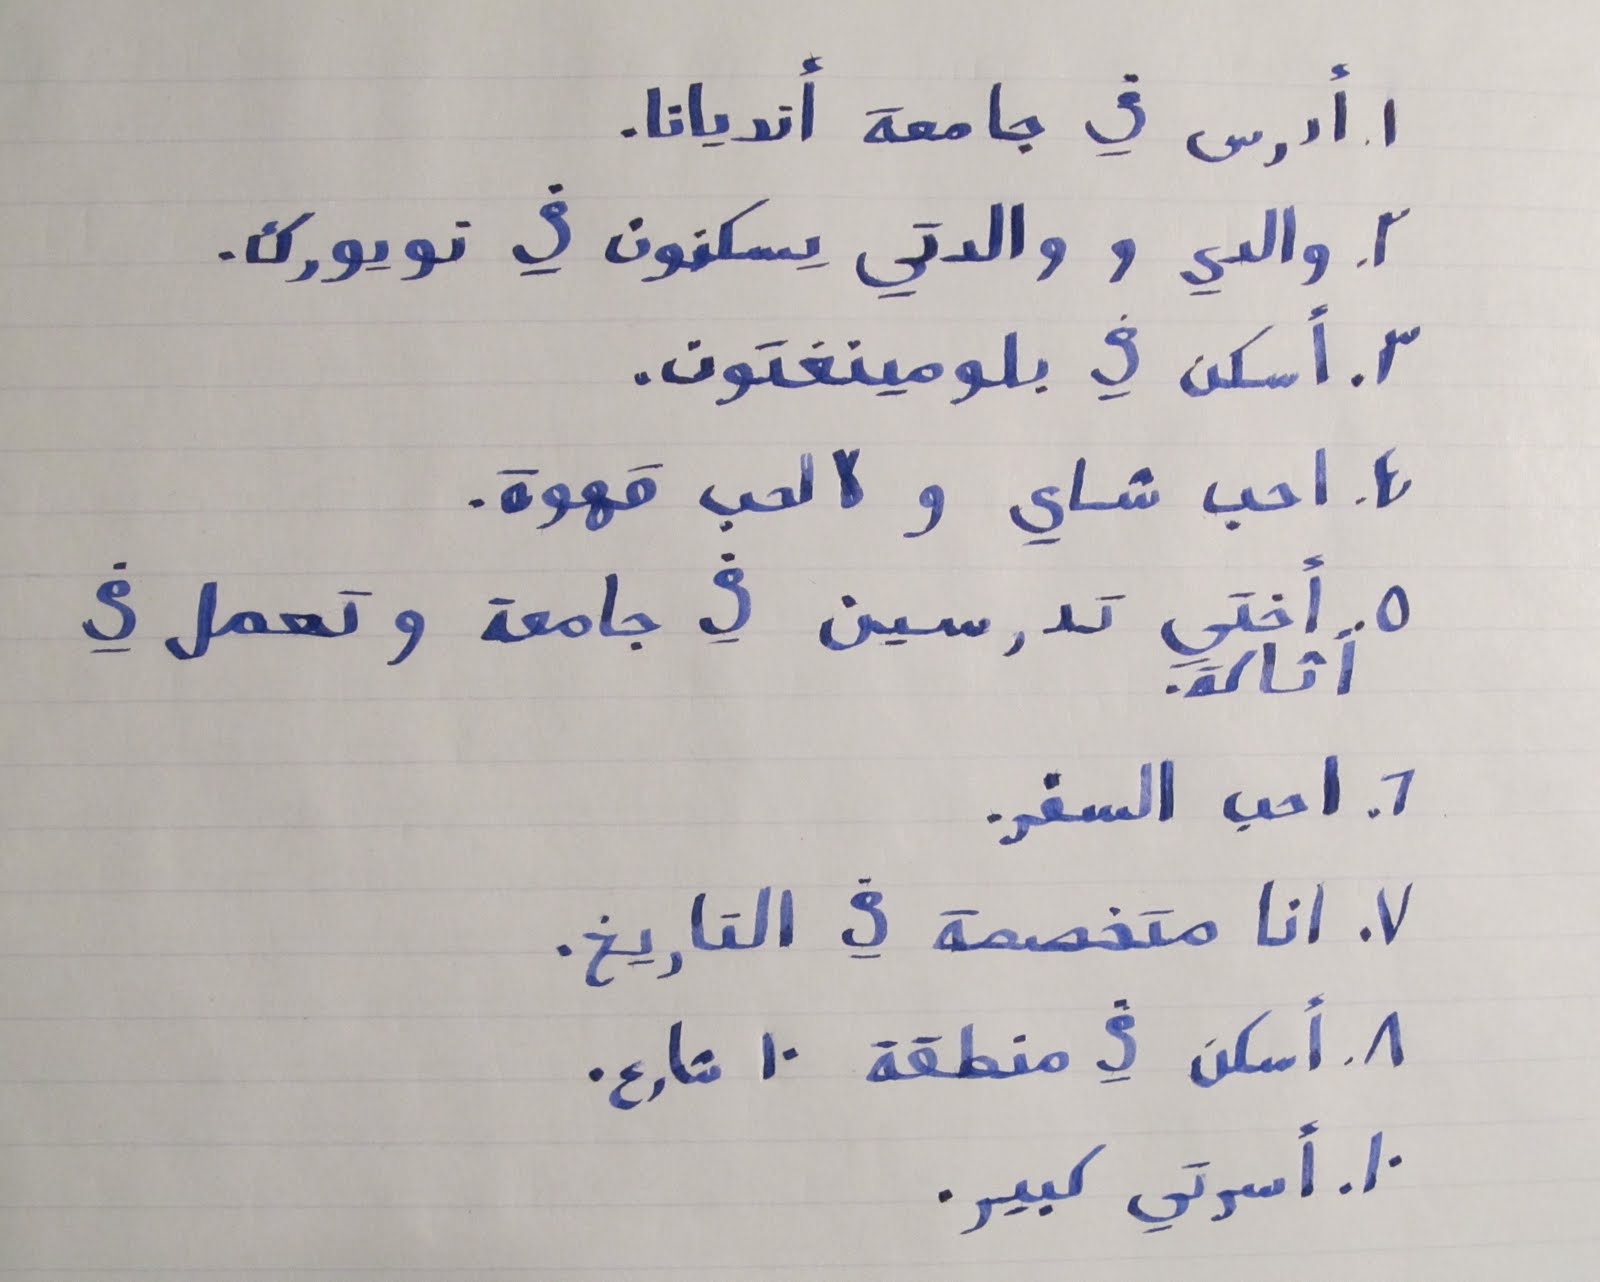 Sad Quotes Written In English Life quotes written in arabic quotesgram